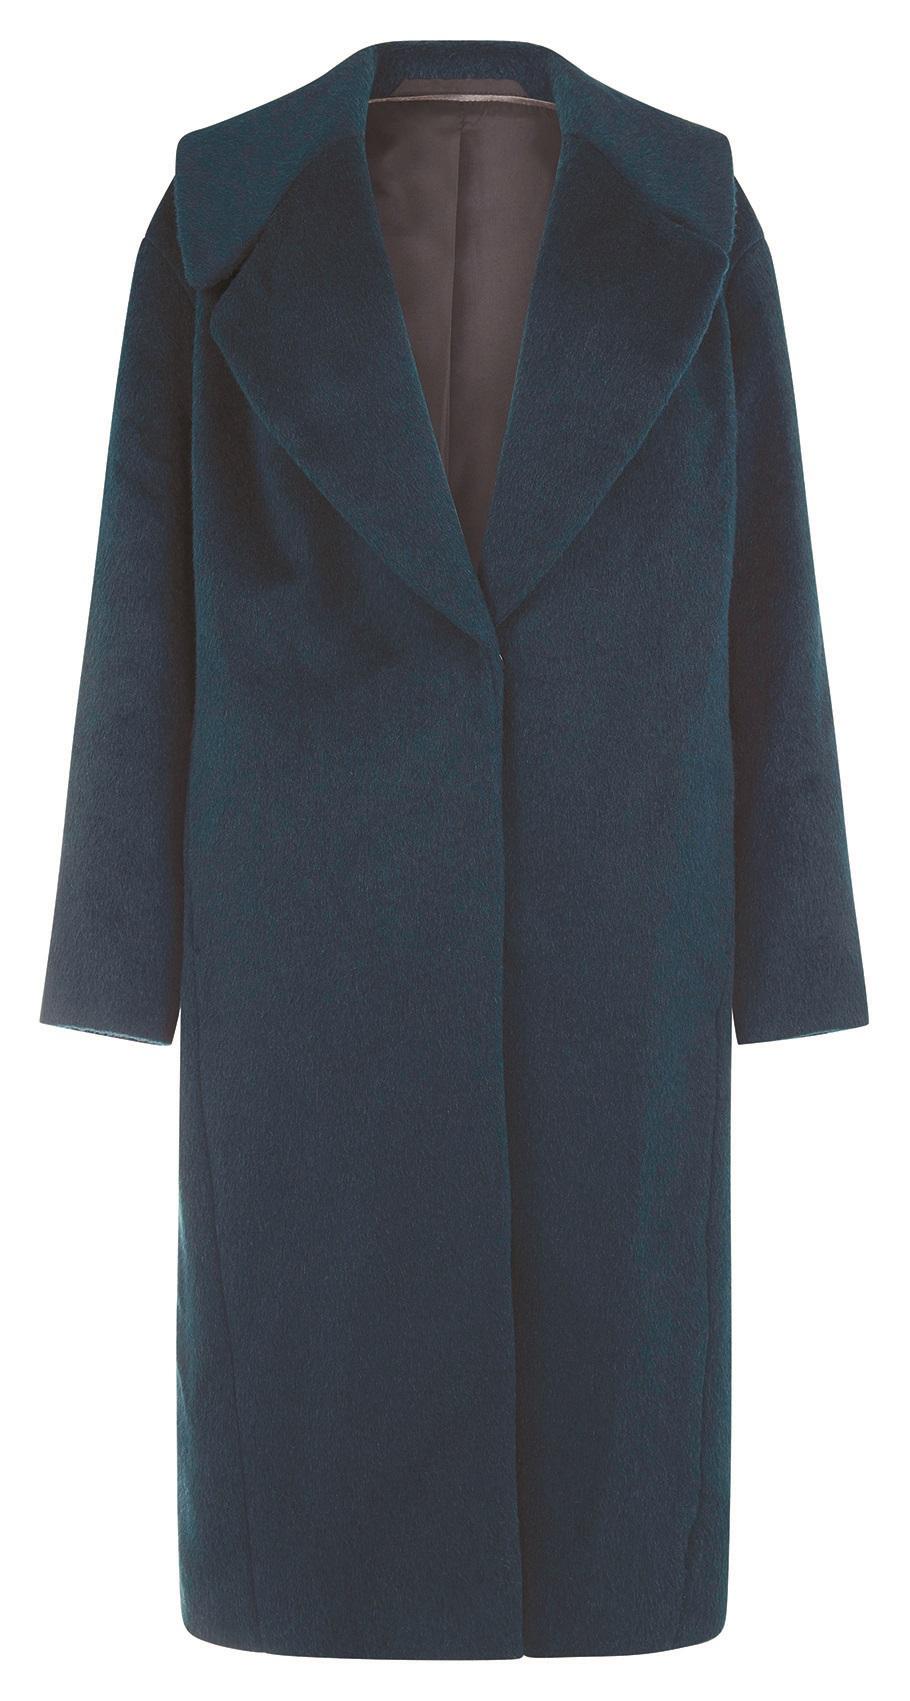 Monsoon, Teal Coat, £179